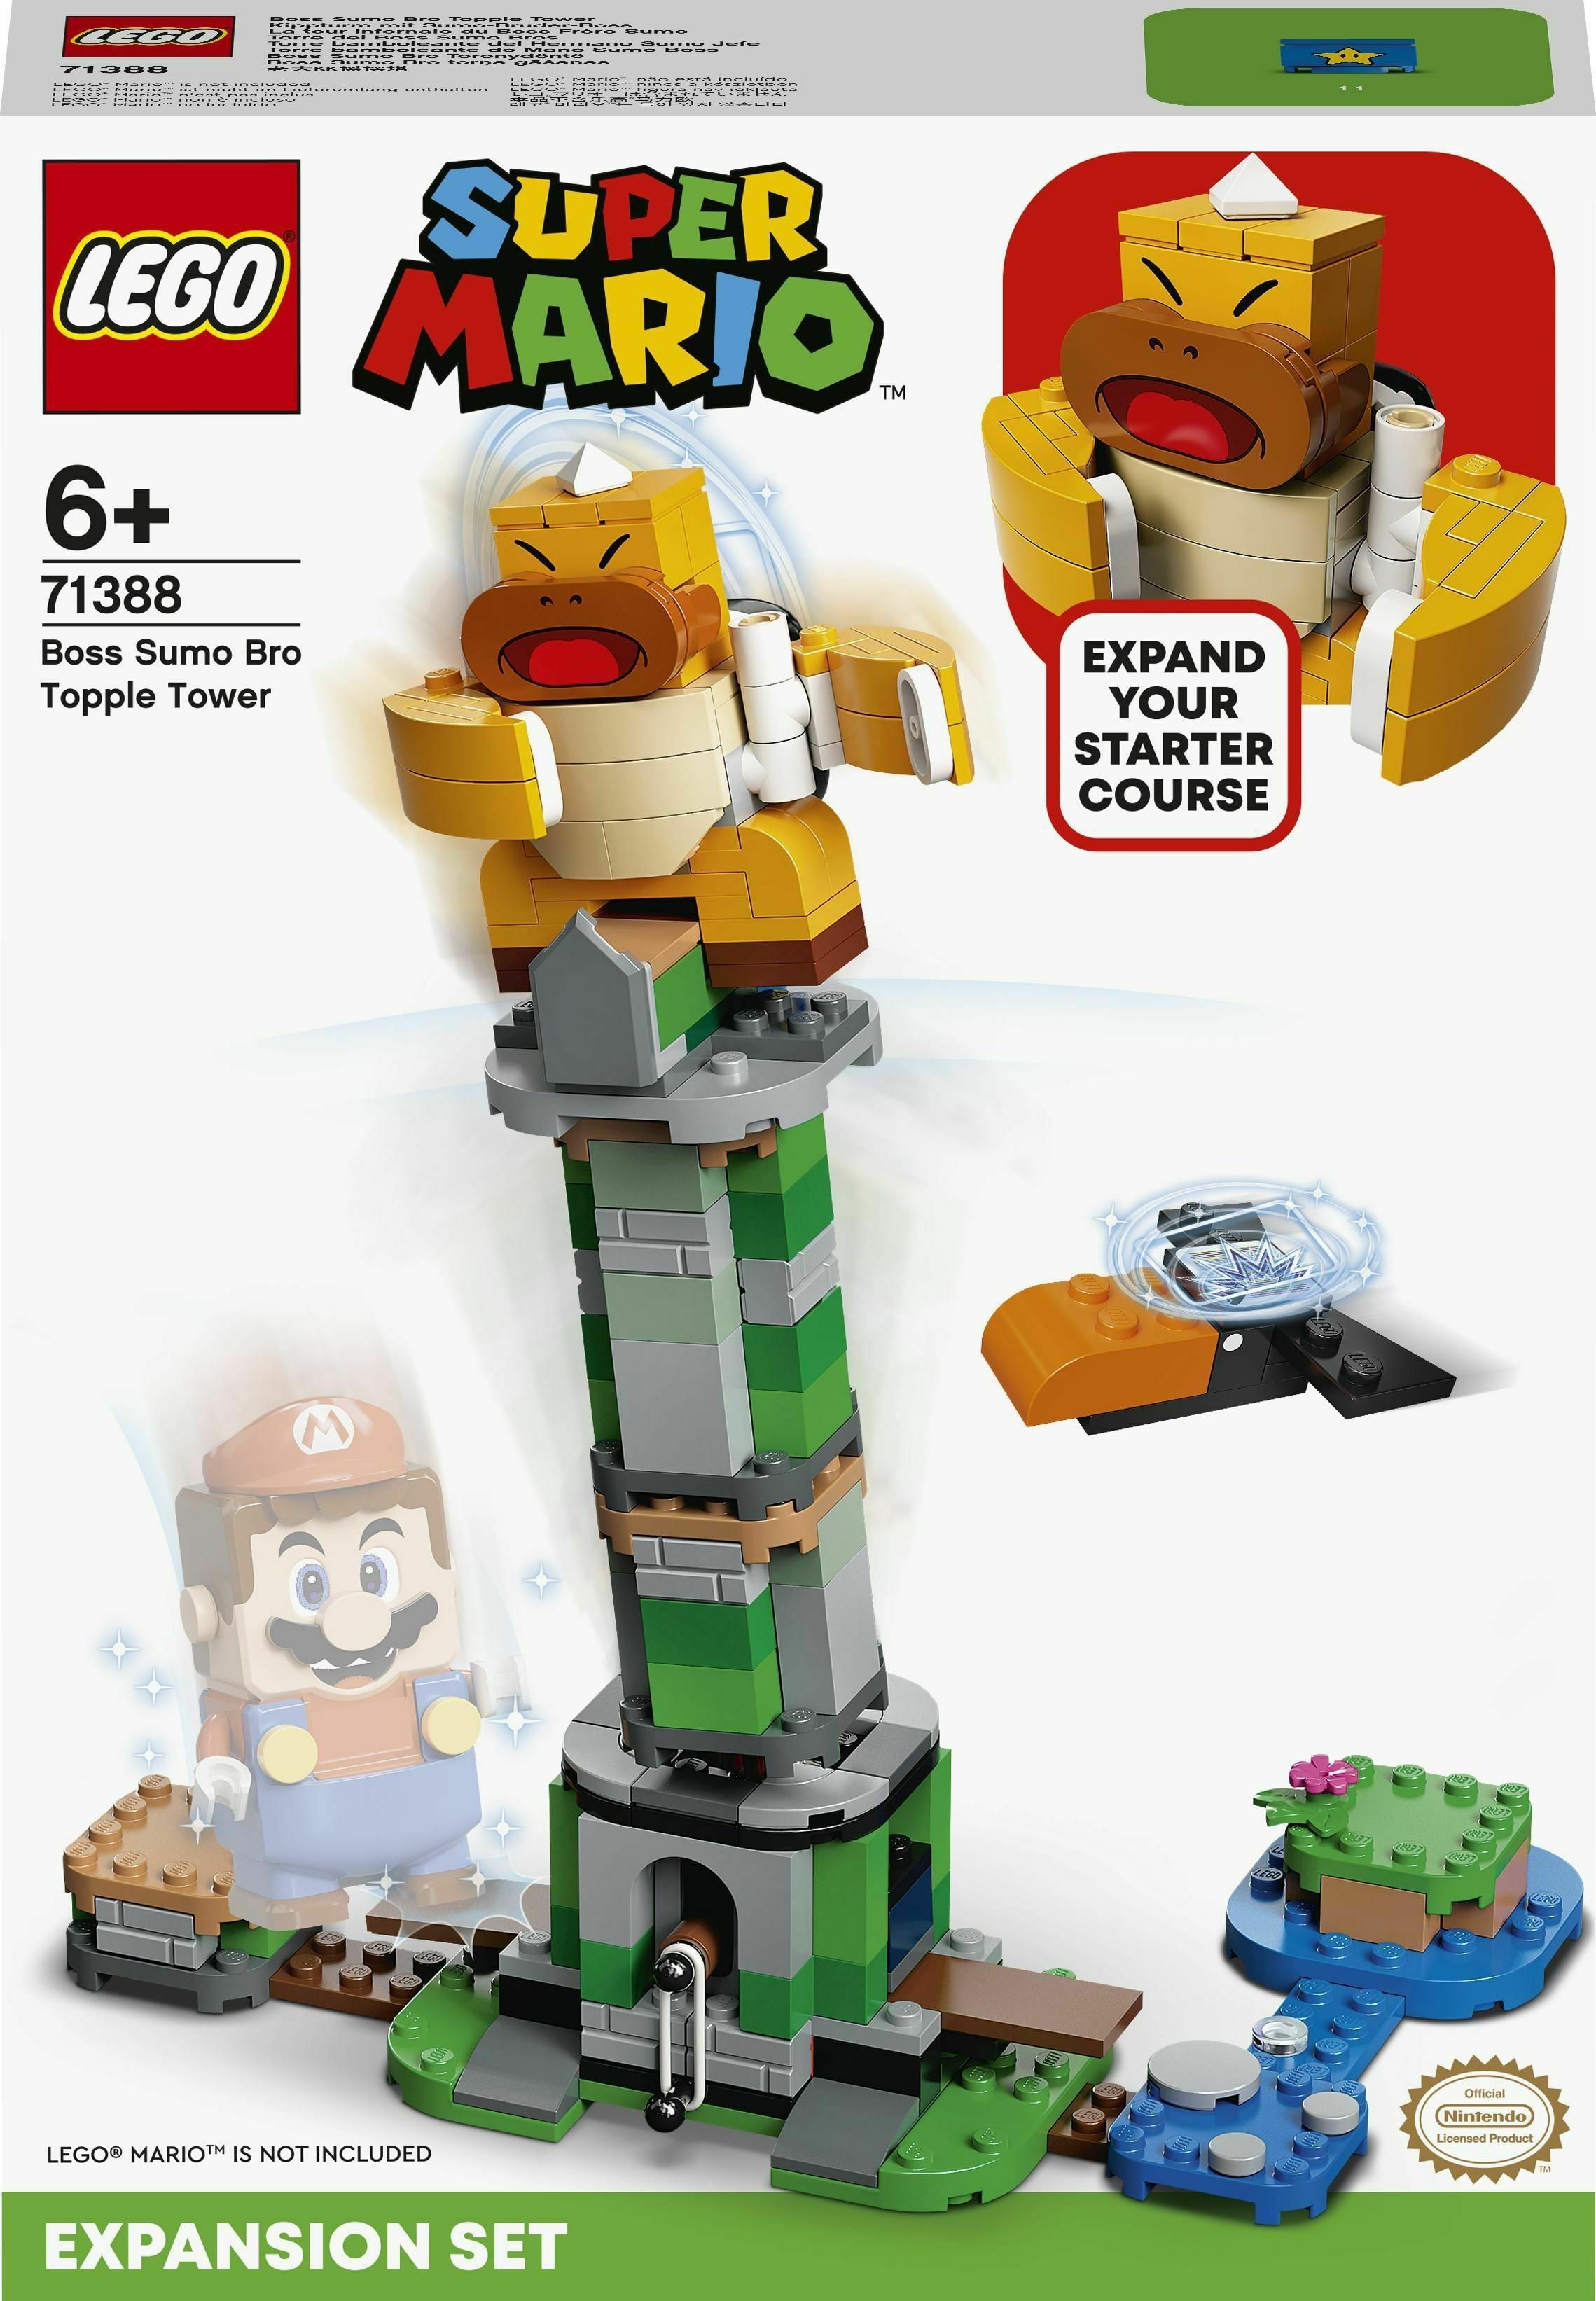 Lego Super Mario 71388 - Boss Sumo Bro i przewracana wieża